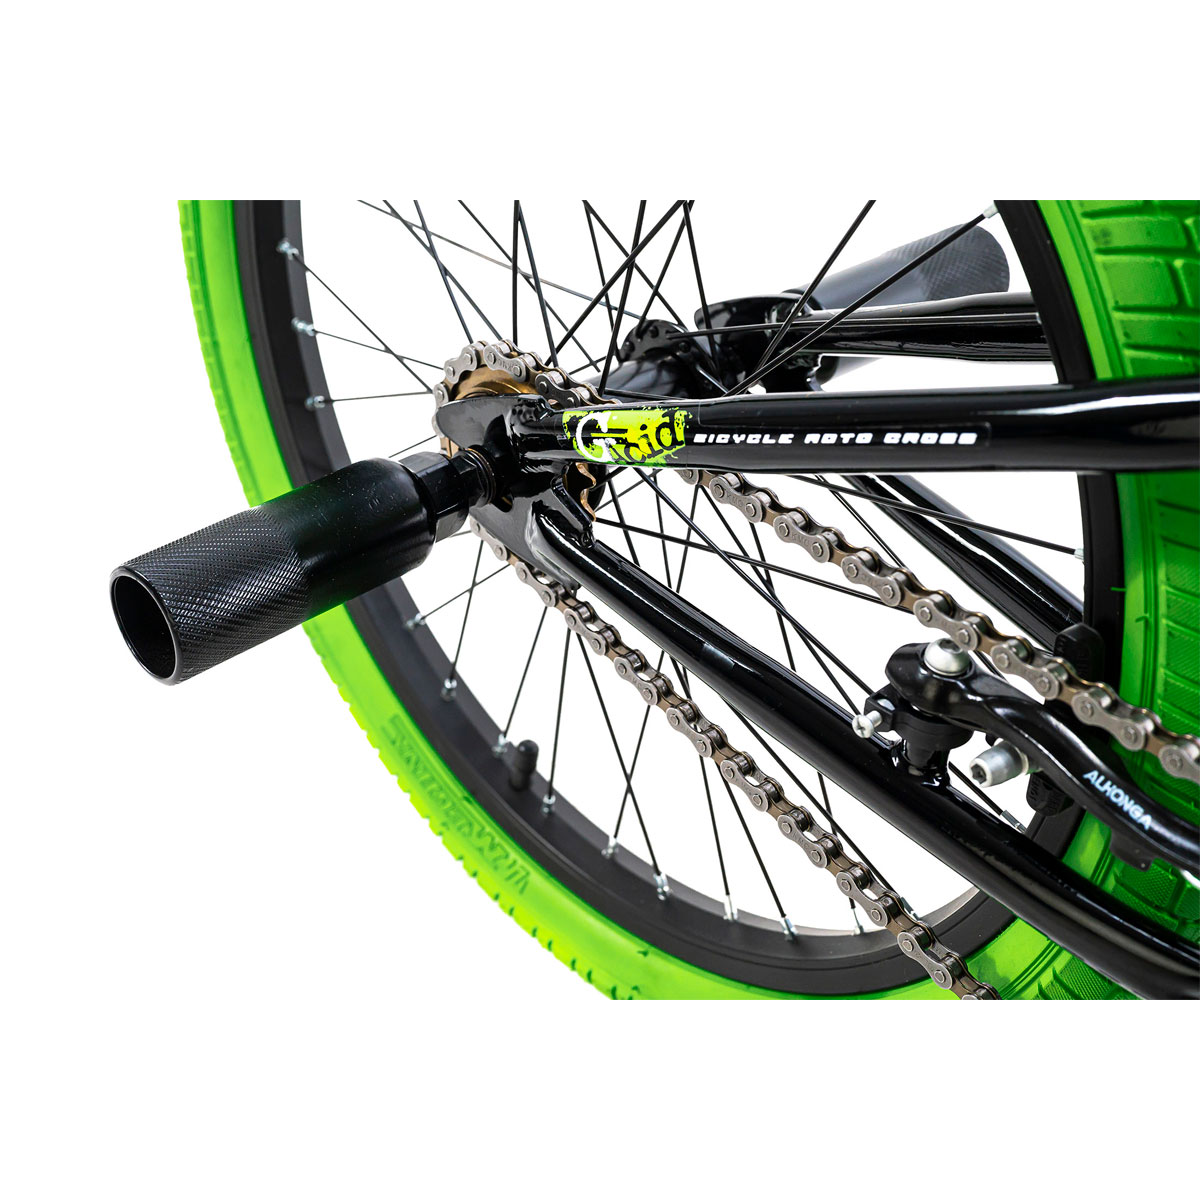 BMX-Rad „G-Acid“, schwarz-grün